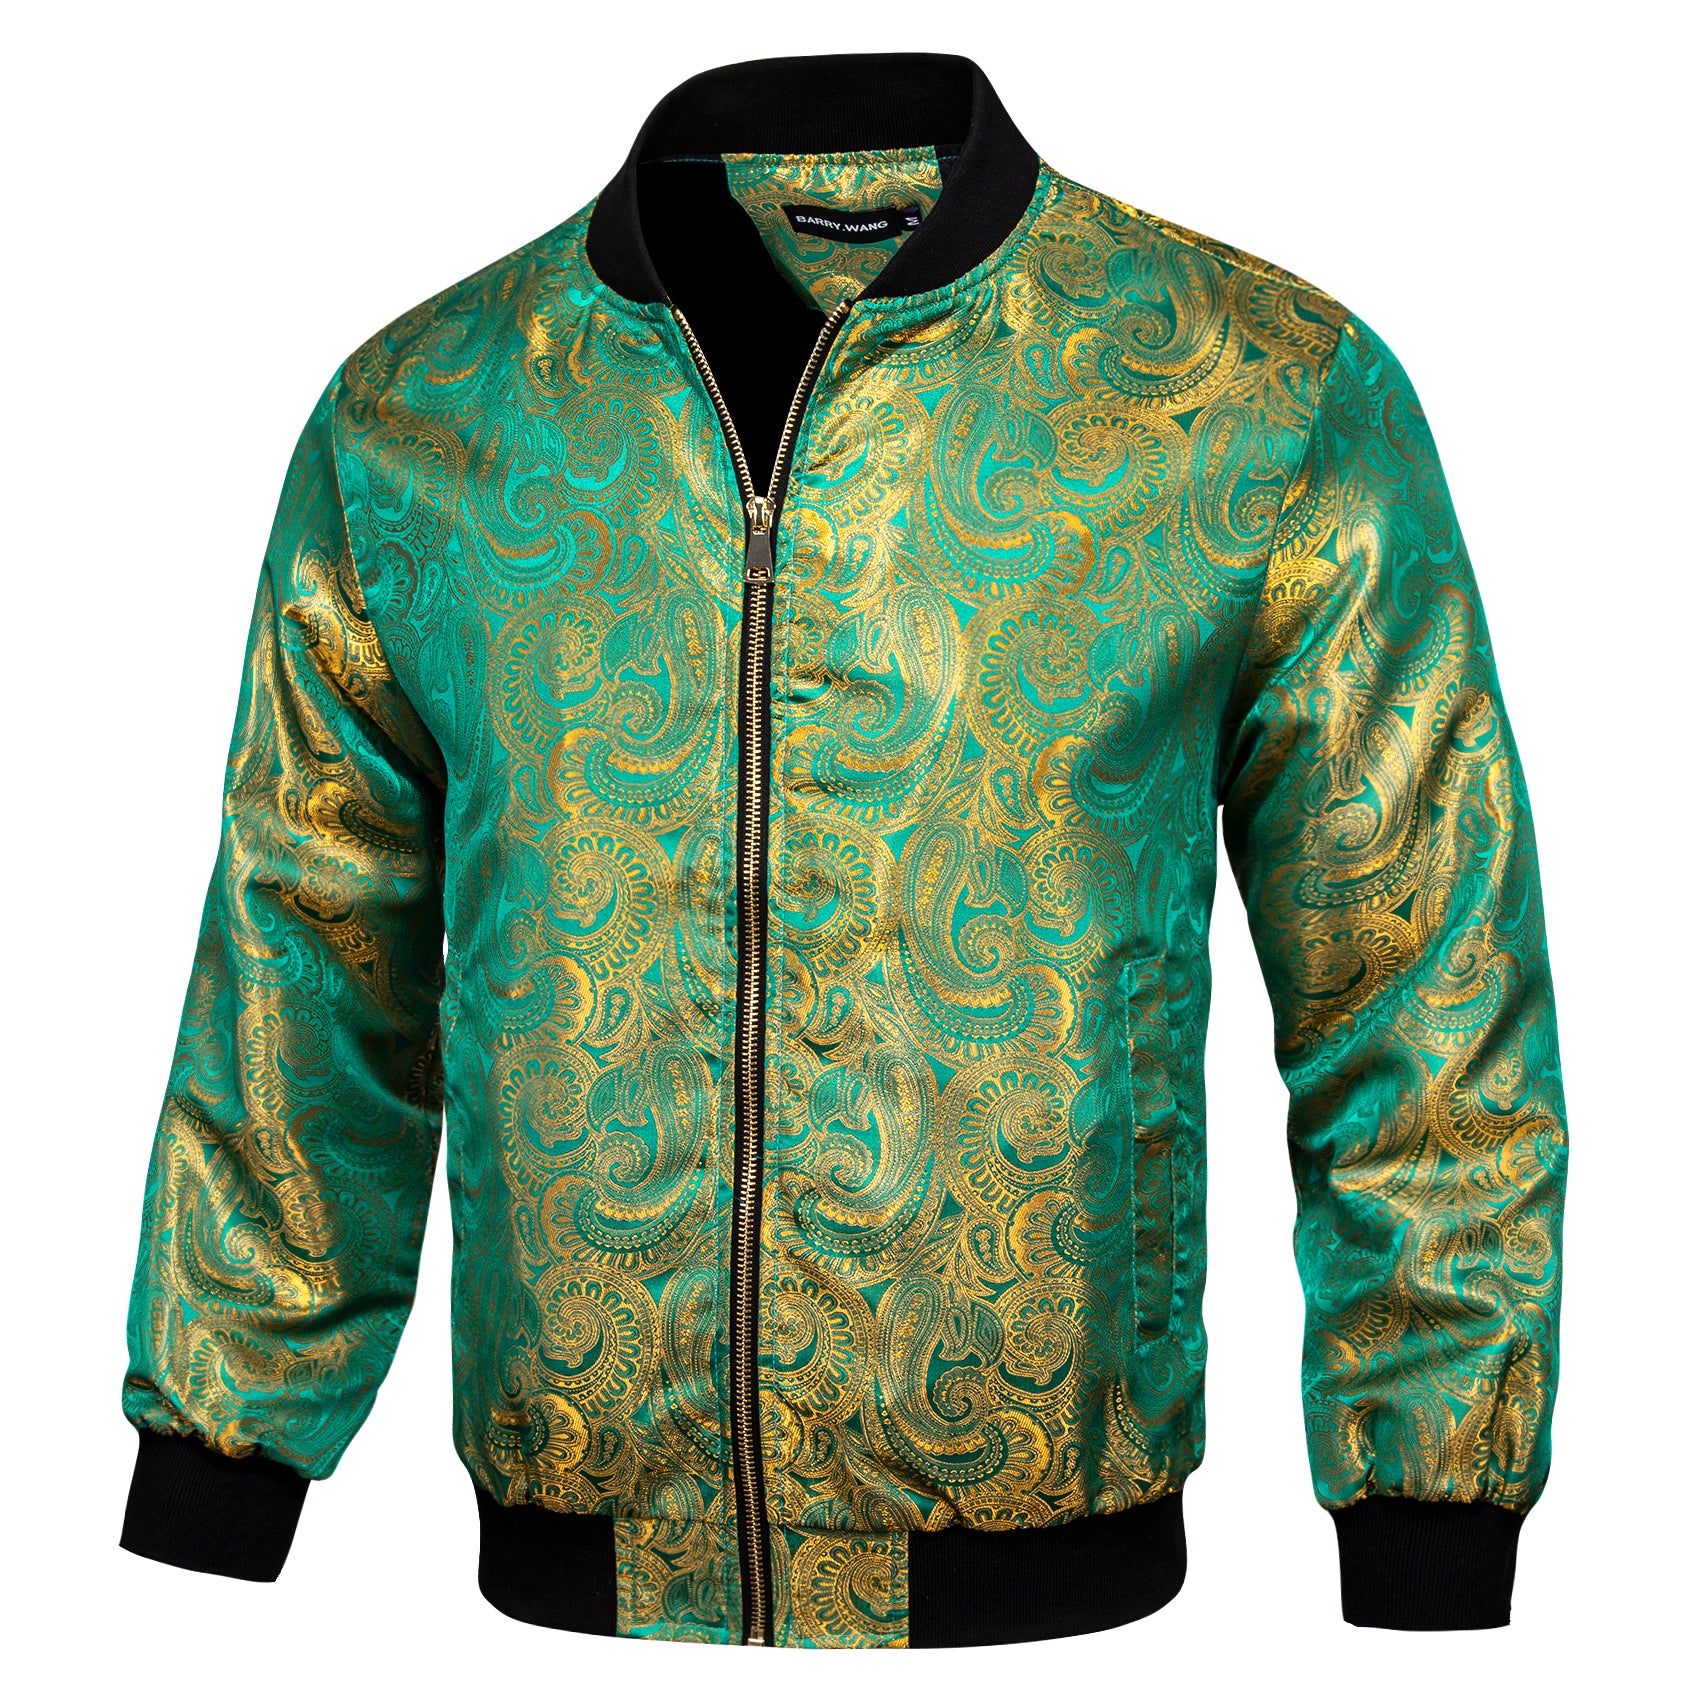 Barry.wang Zipper Jacket Green Gold Floral Jacquard Paisley Men's Jacket